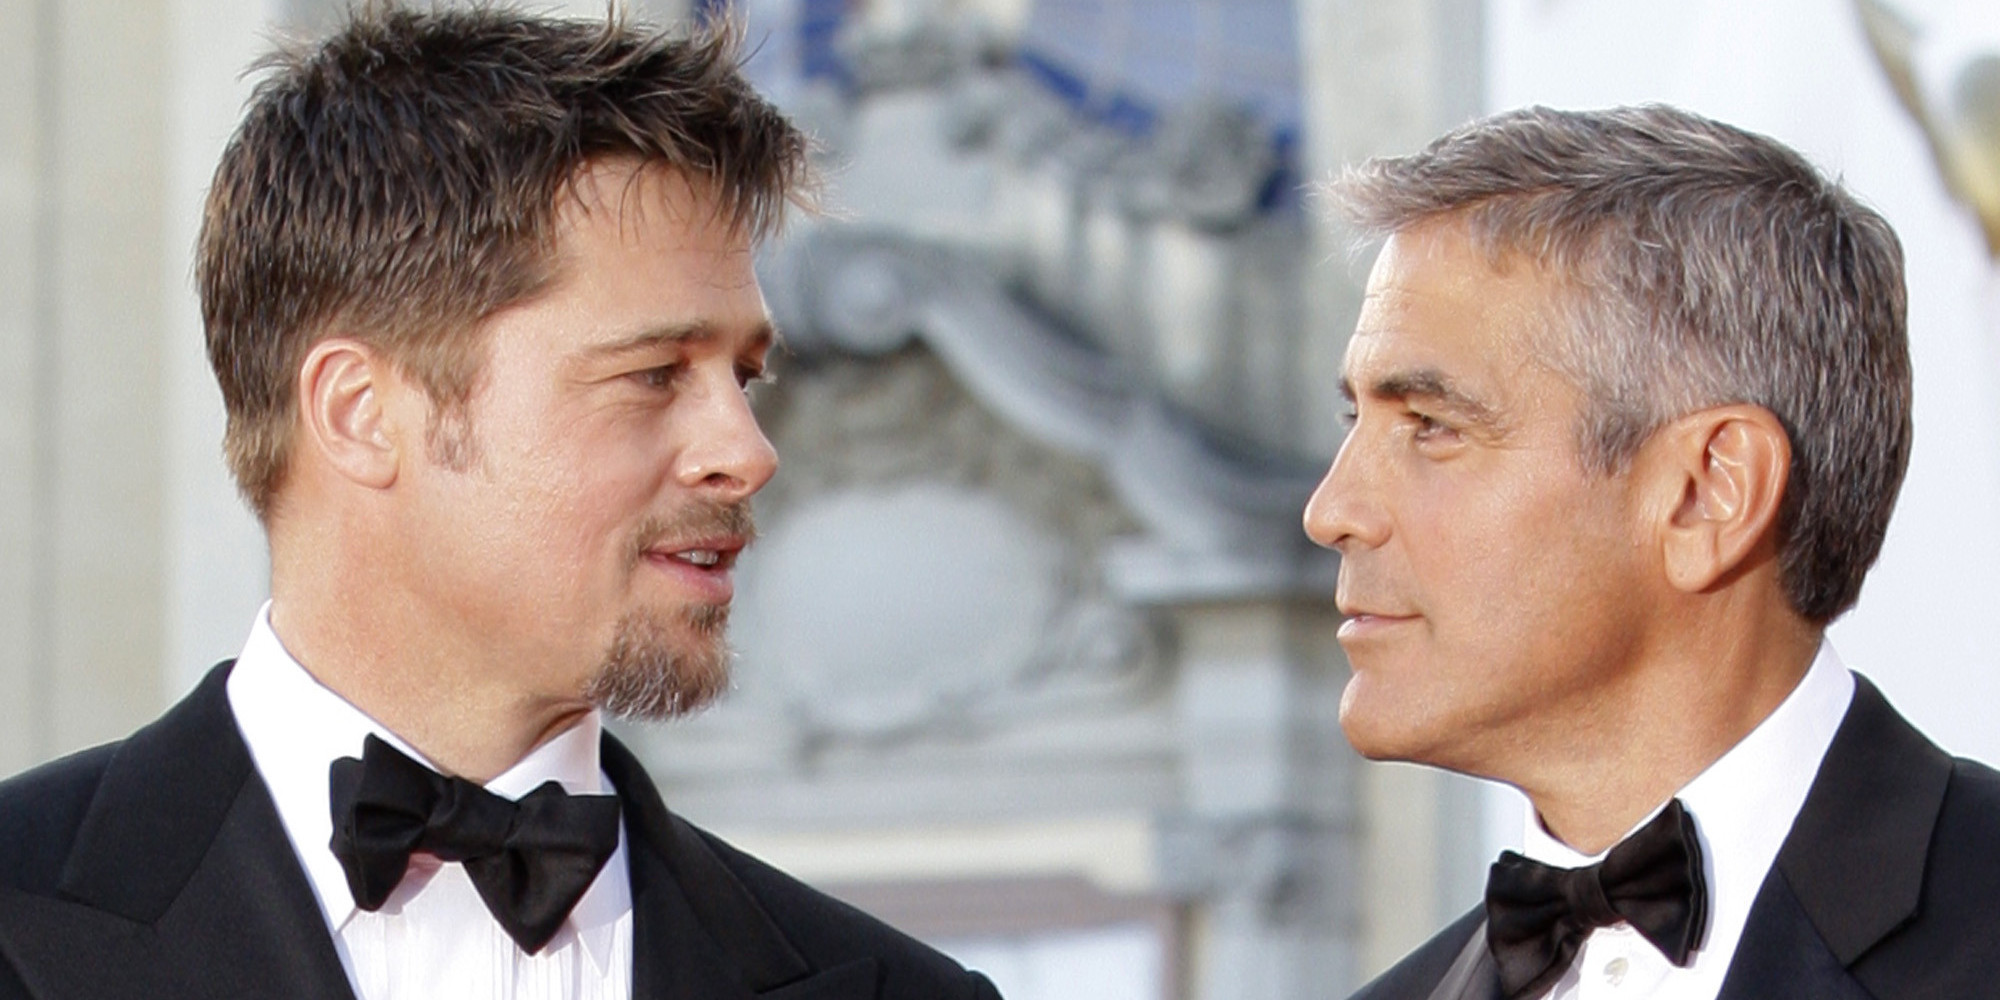 Джордж Клуни и Брэд Питт. Brad Pitt and George Clooney. Брэд Питт в смокинге. 12 Друзей Оушена Клуни и Брэд. Клуни питт